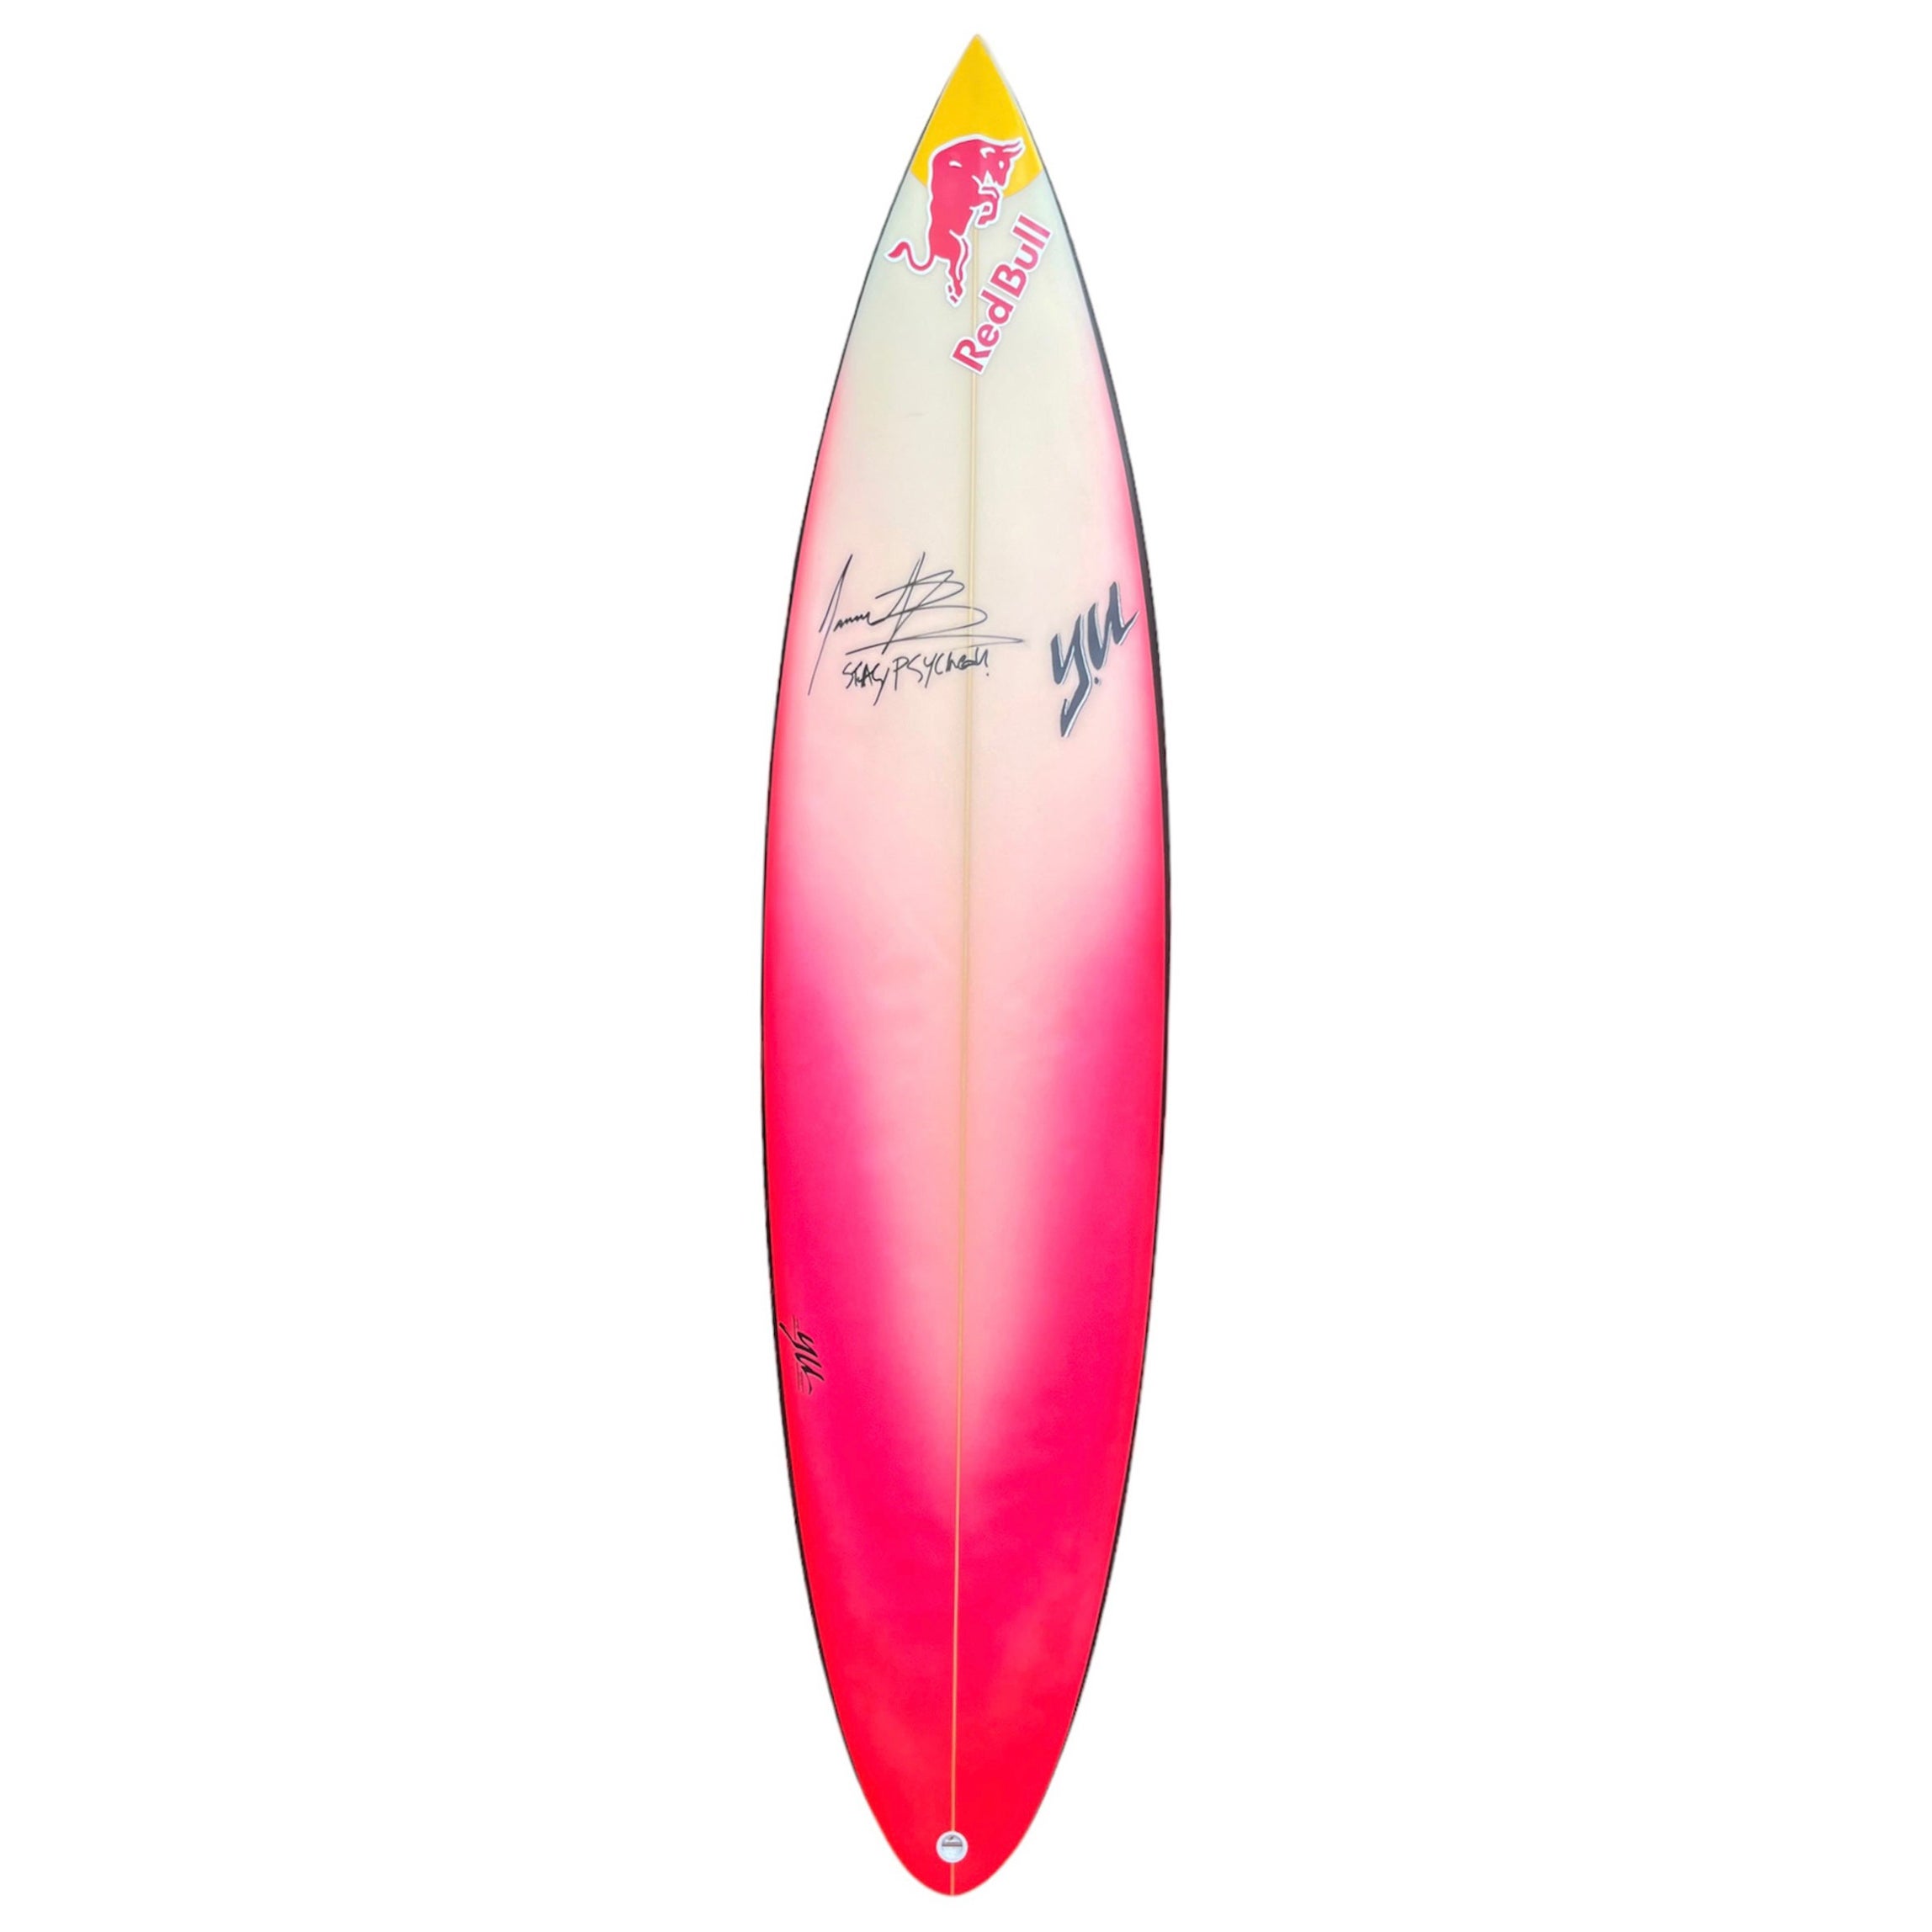 Jamie O’Brien’s personal Pipeline surfboard by Y.U (Yoshinori Ueda) For Sale